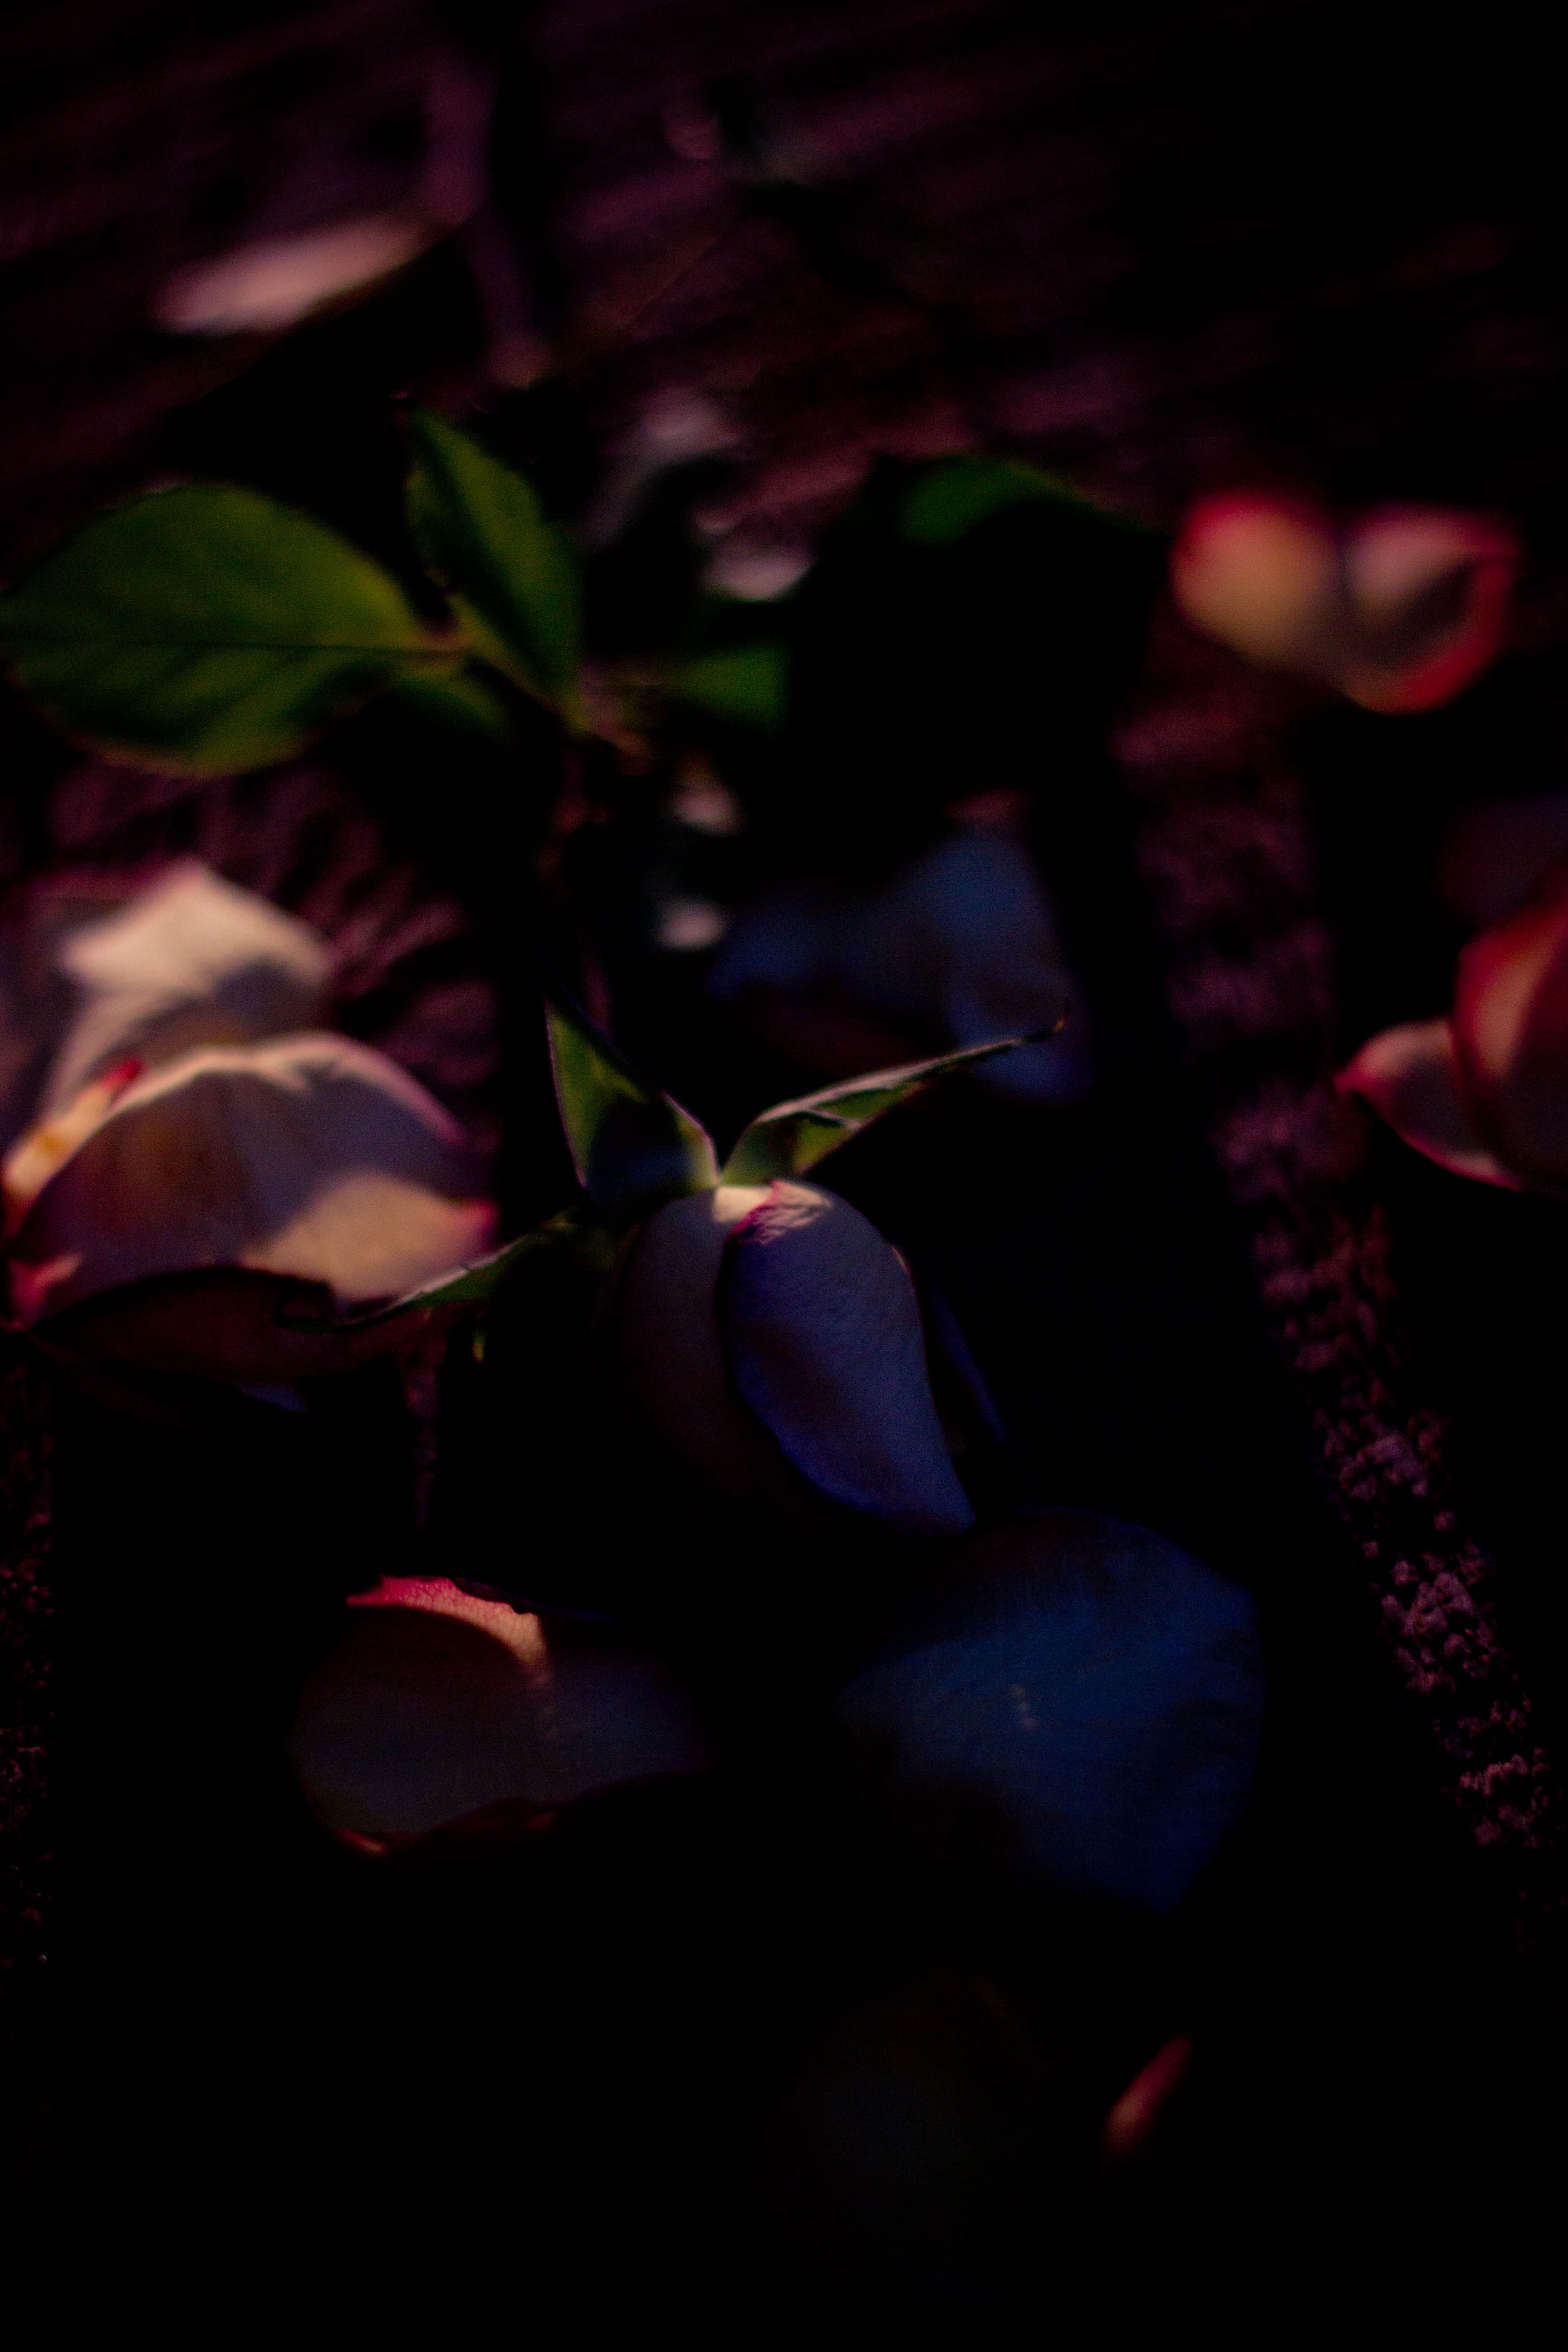 Free Image : flower, darkness, light, petal, plant, leaf, lighting, computer wallpaper, midnight, night, still life photography, macro photography 3456x5184 - Macro